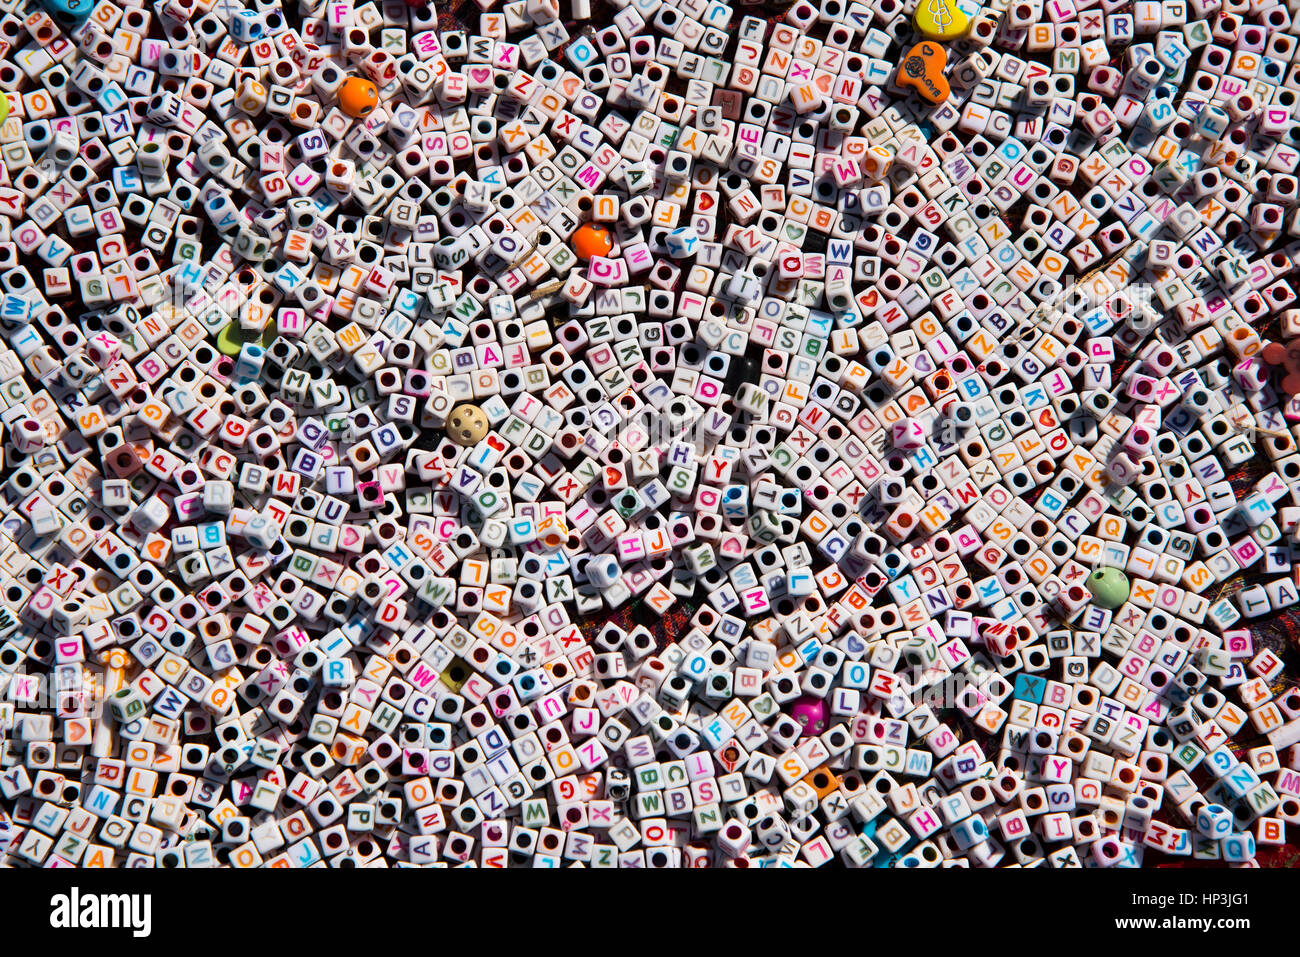 Multi-colored English alphabet beads background. Concept Image. Stock Photo